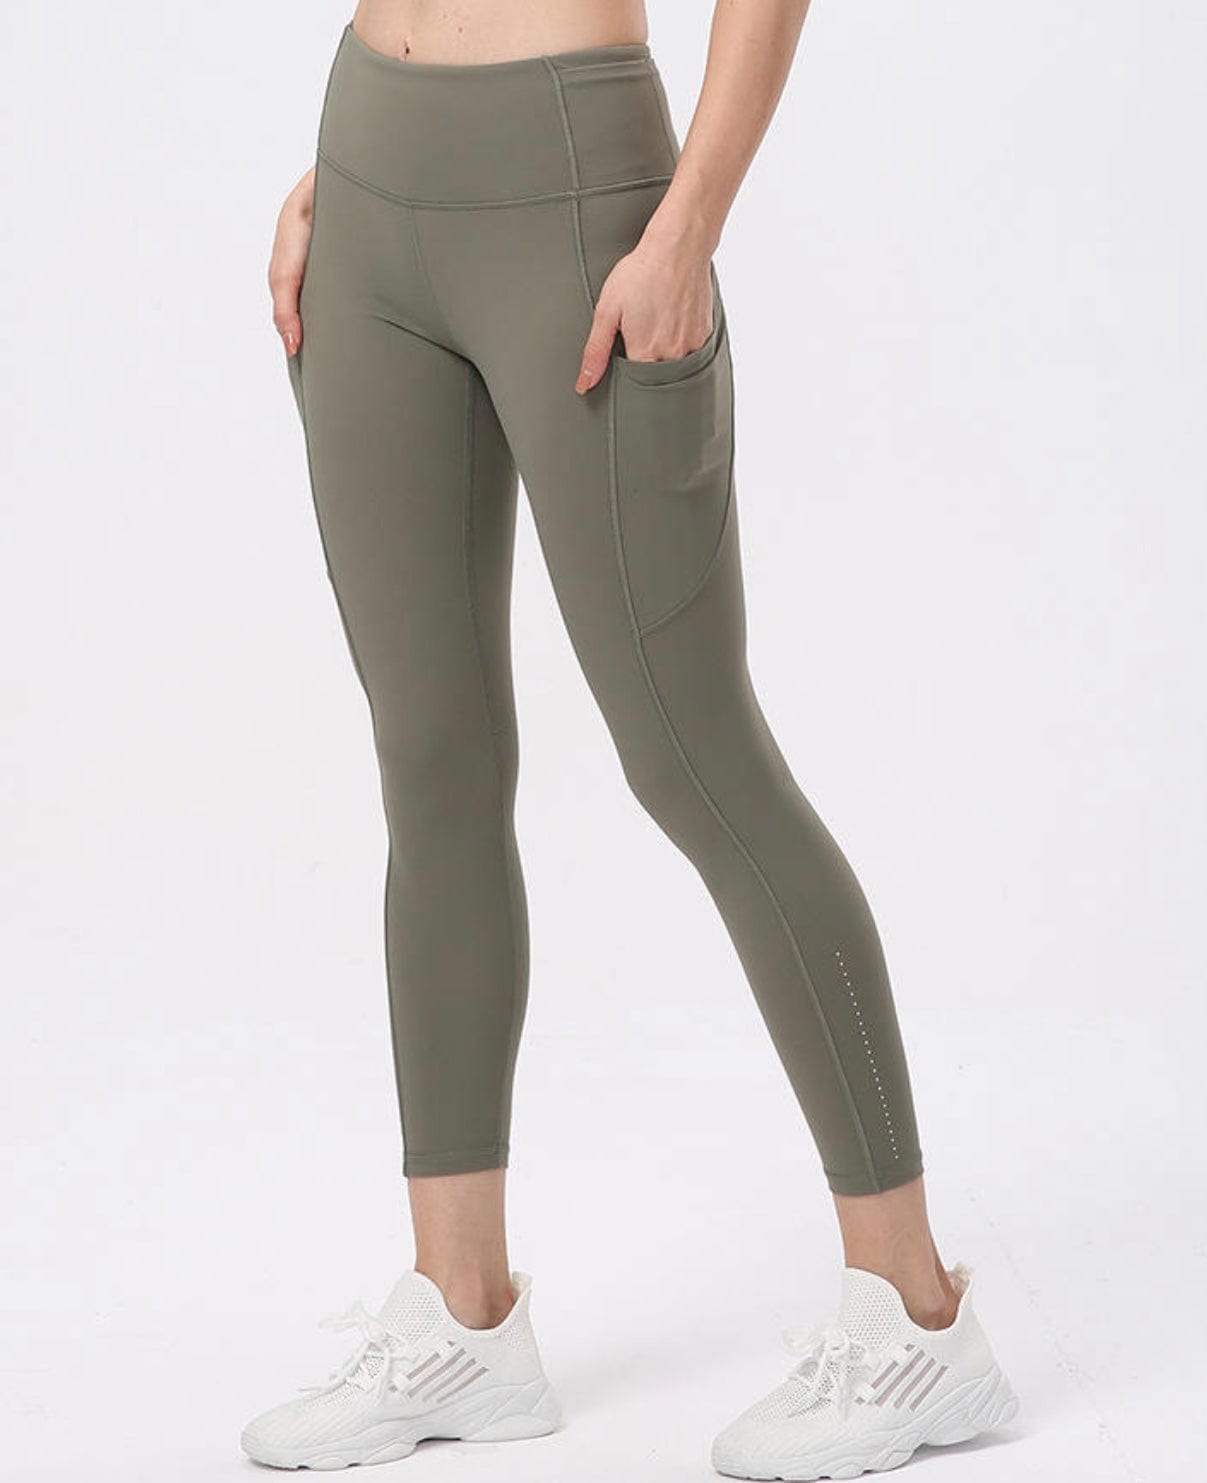 Essential 4.0 leggings (pocket leggings with front seam and elastic band) - 24.5 inch inseam